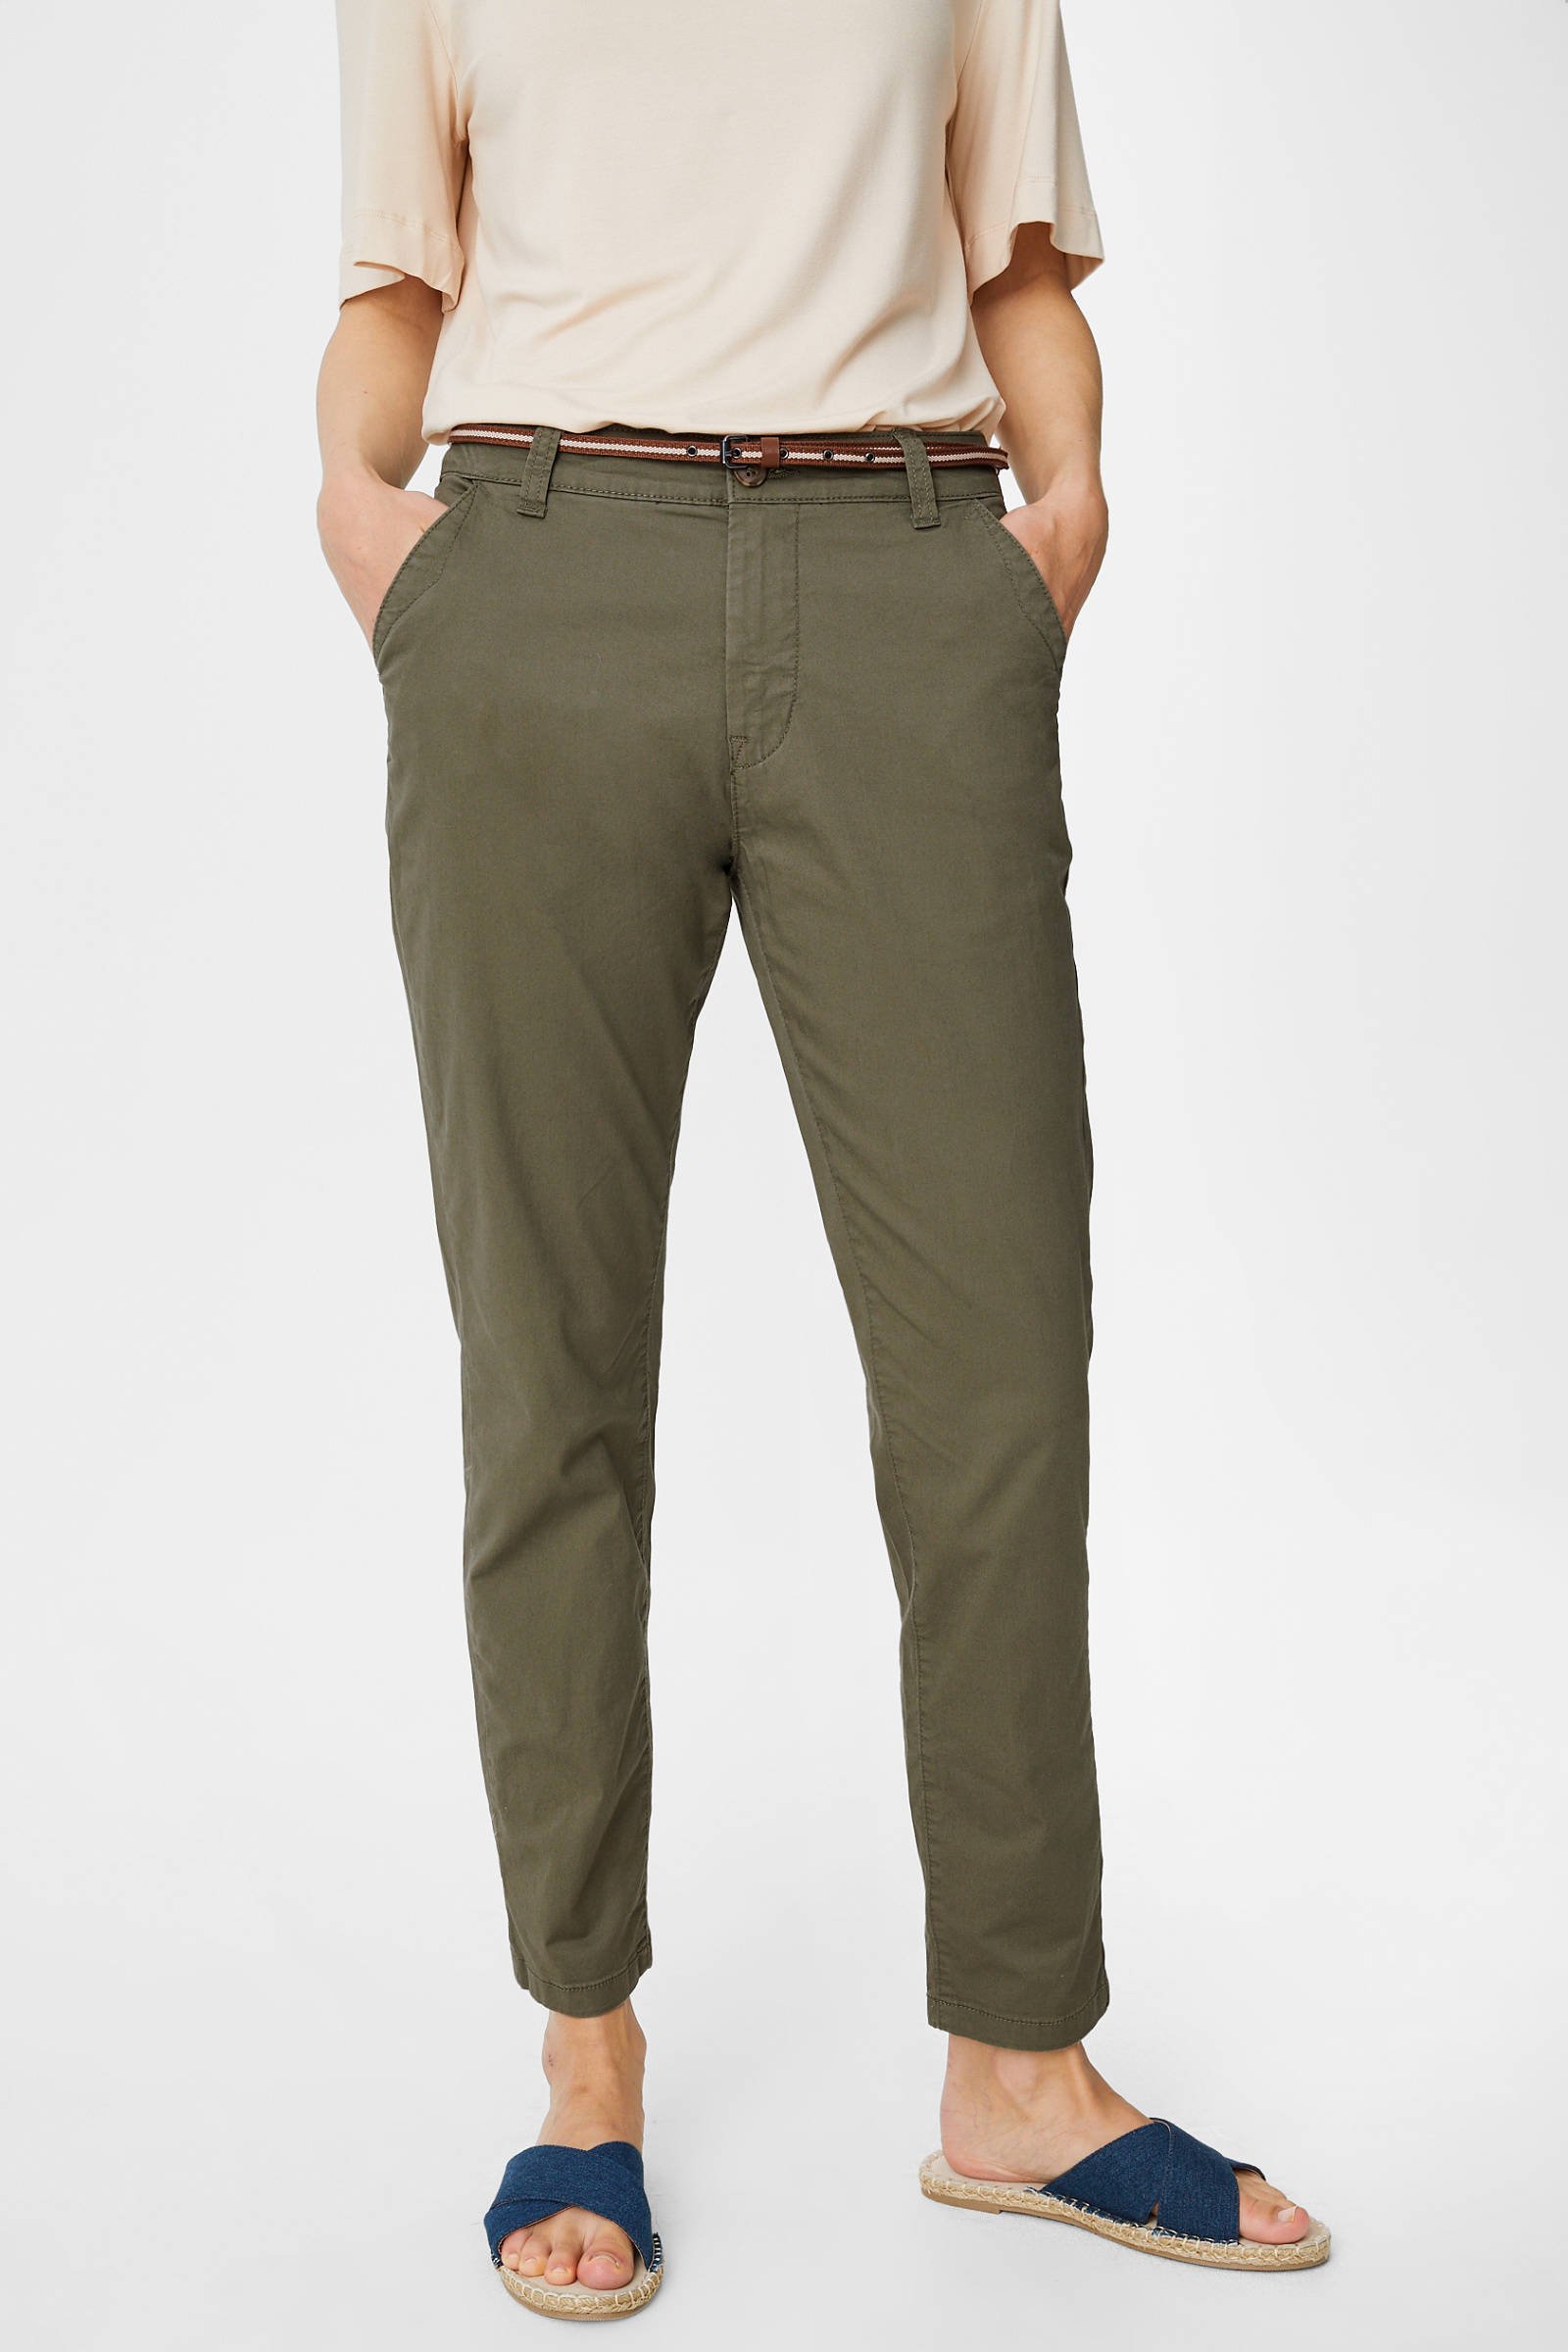 C&A Yessica Pantalon lichtgrijs gestippeld zakelijke stijl Mode Pakken Pantalons 